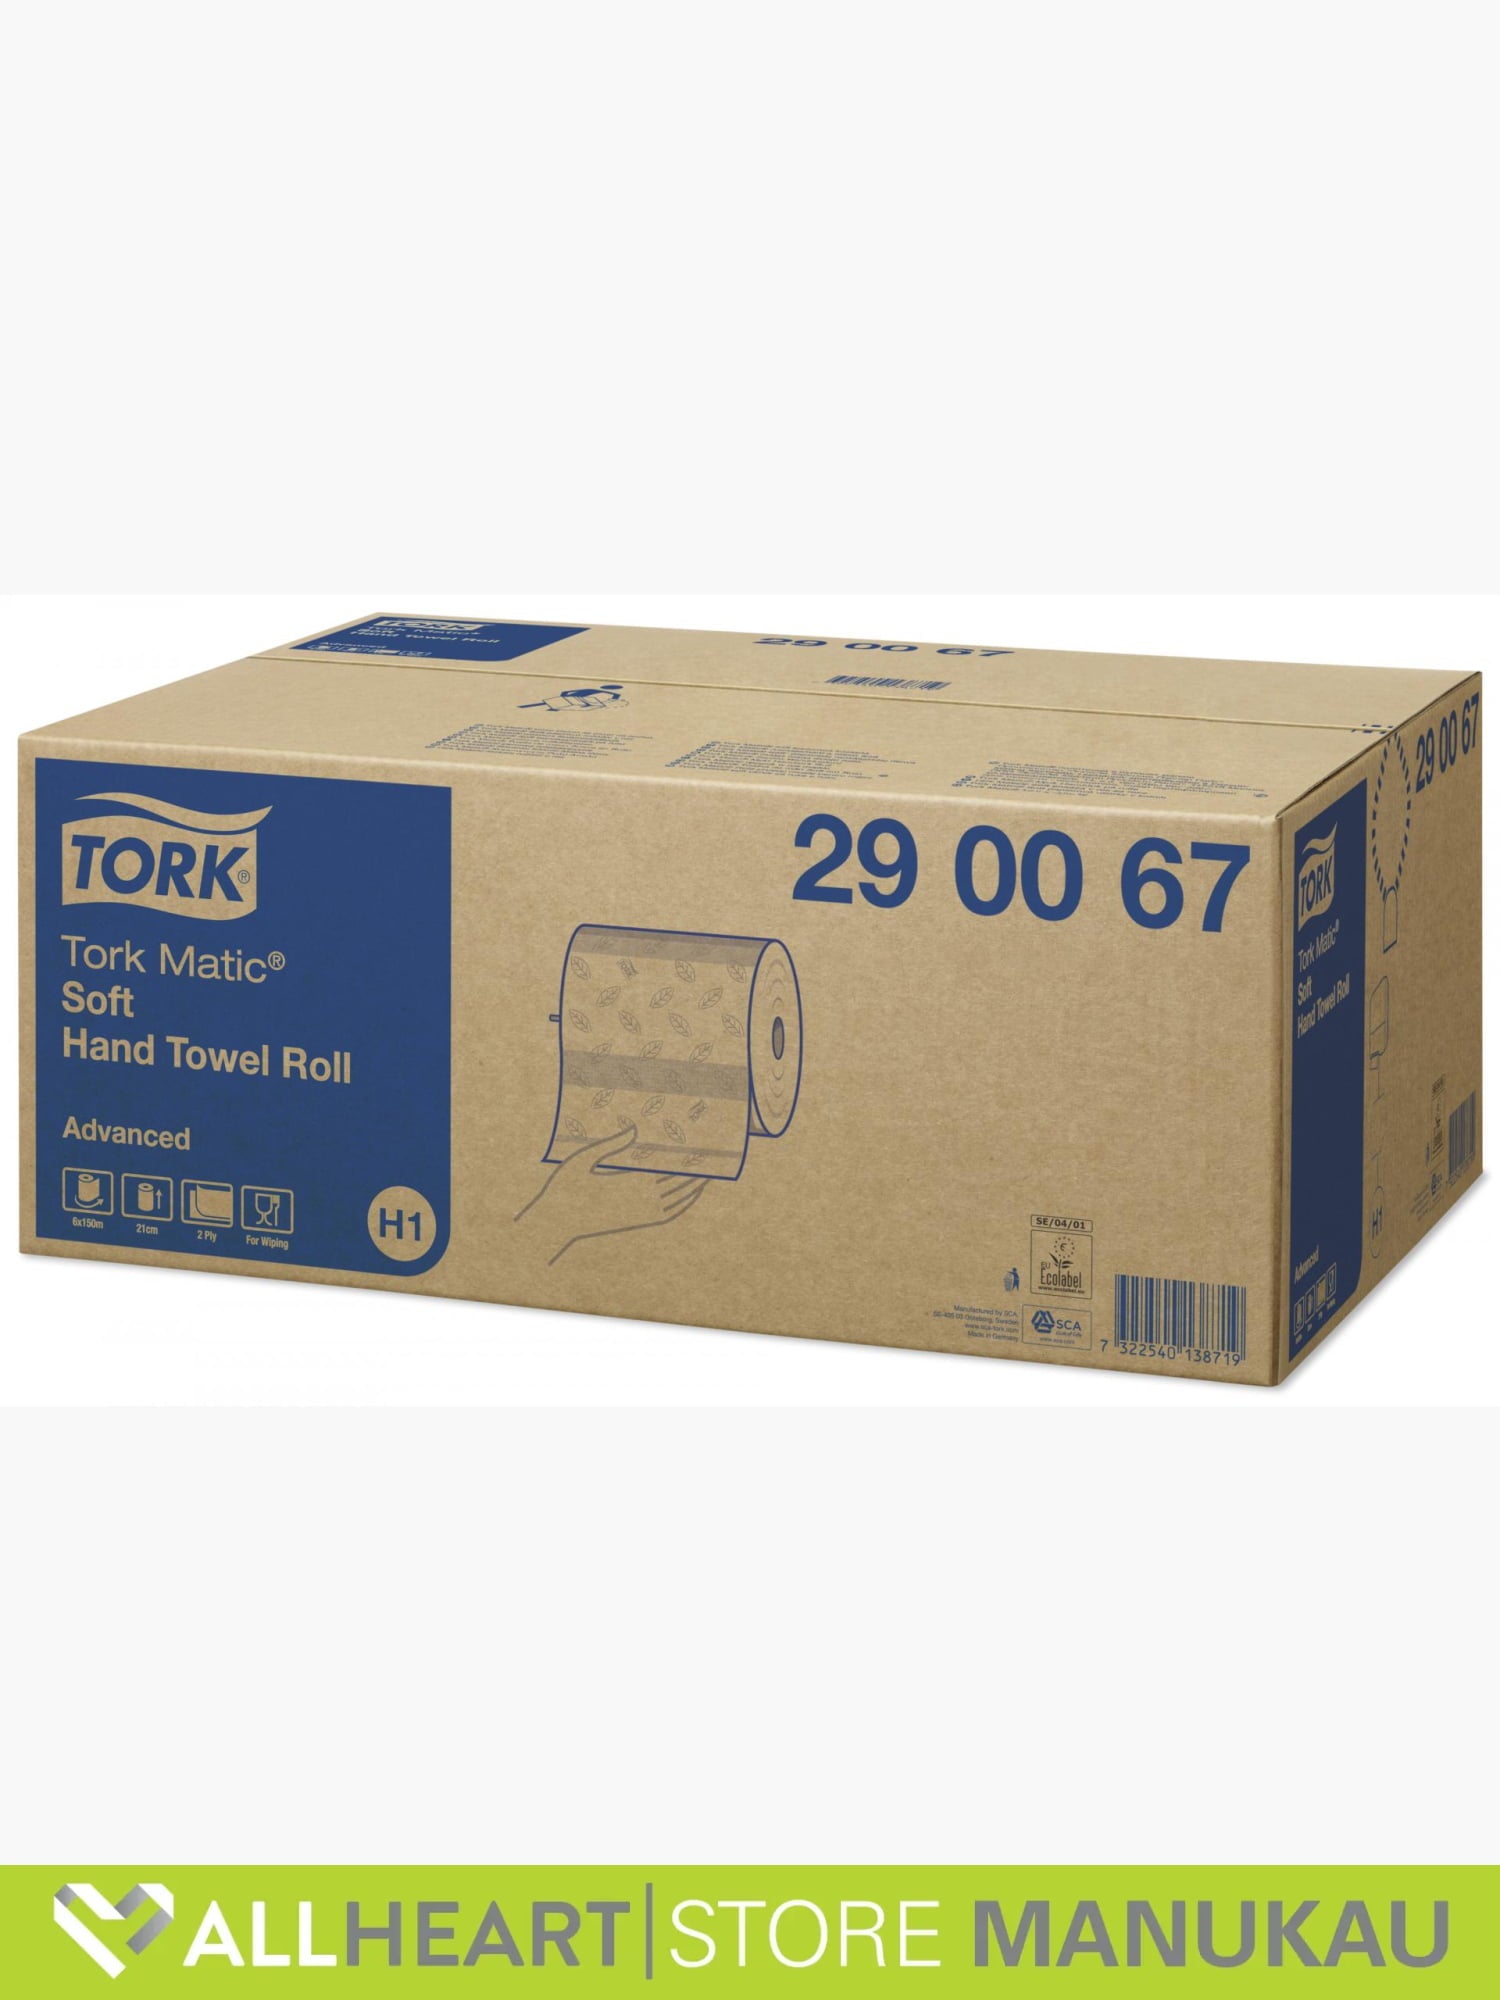 Tork Matic - Soft Hand Towel Roll - 29 00 67